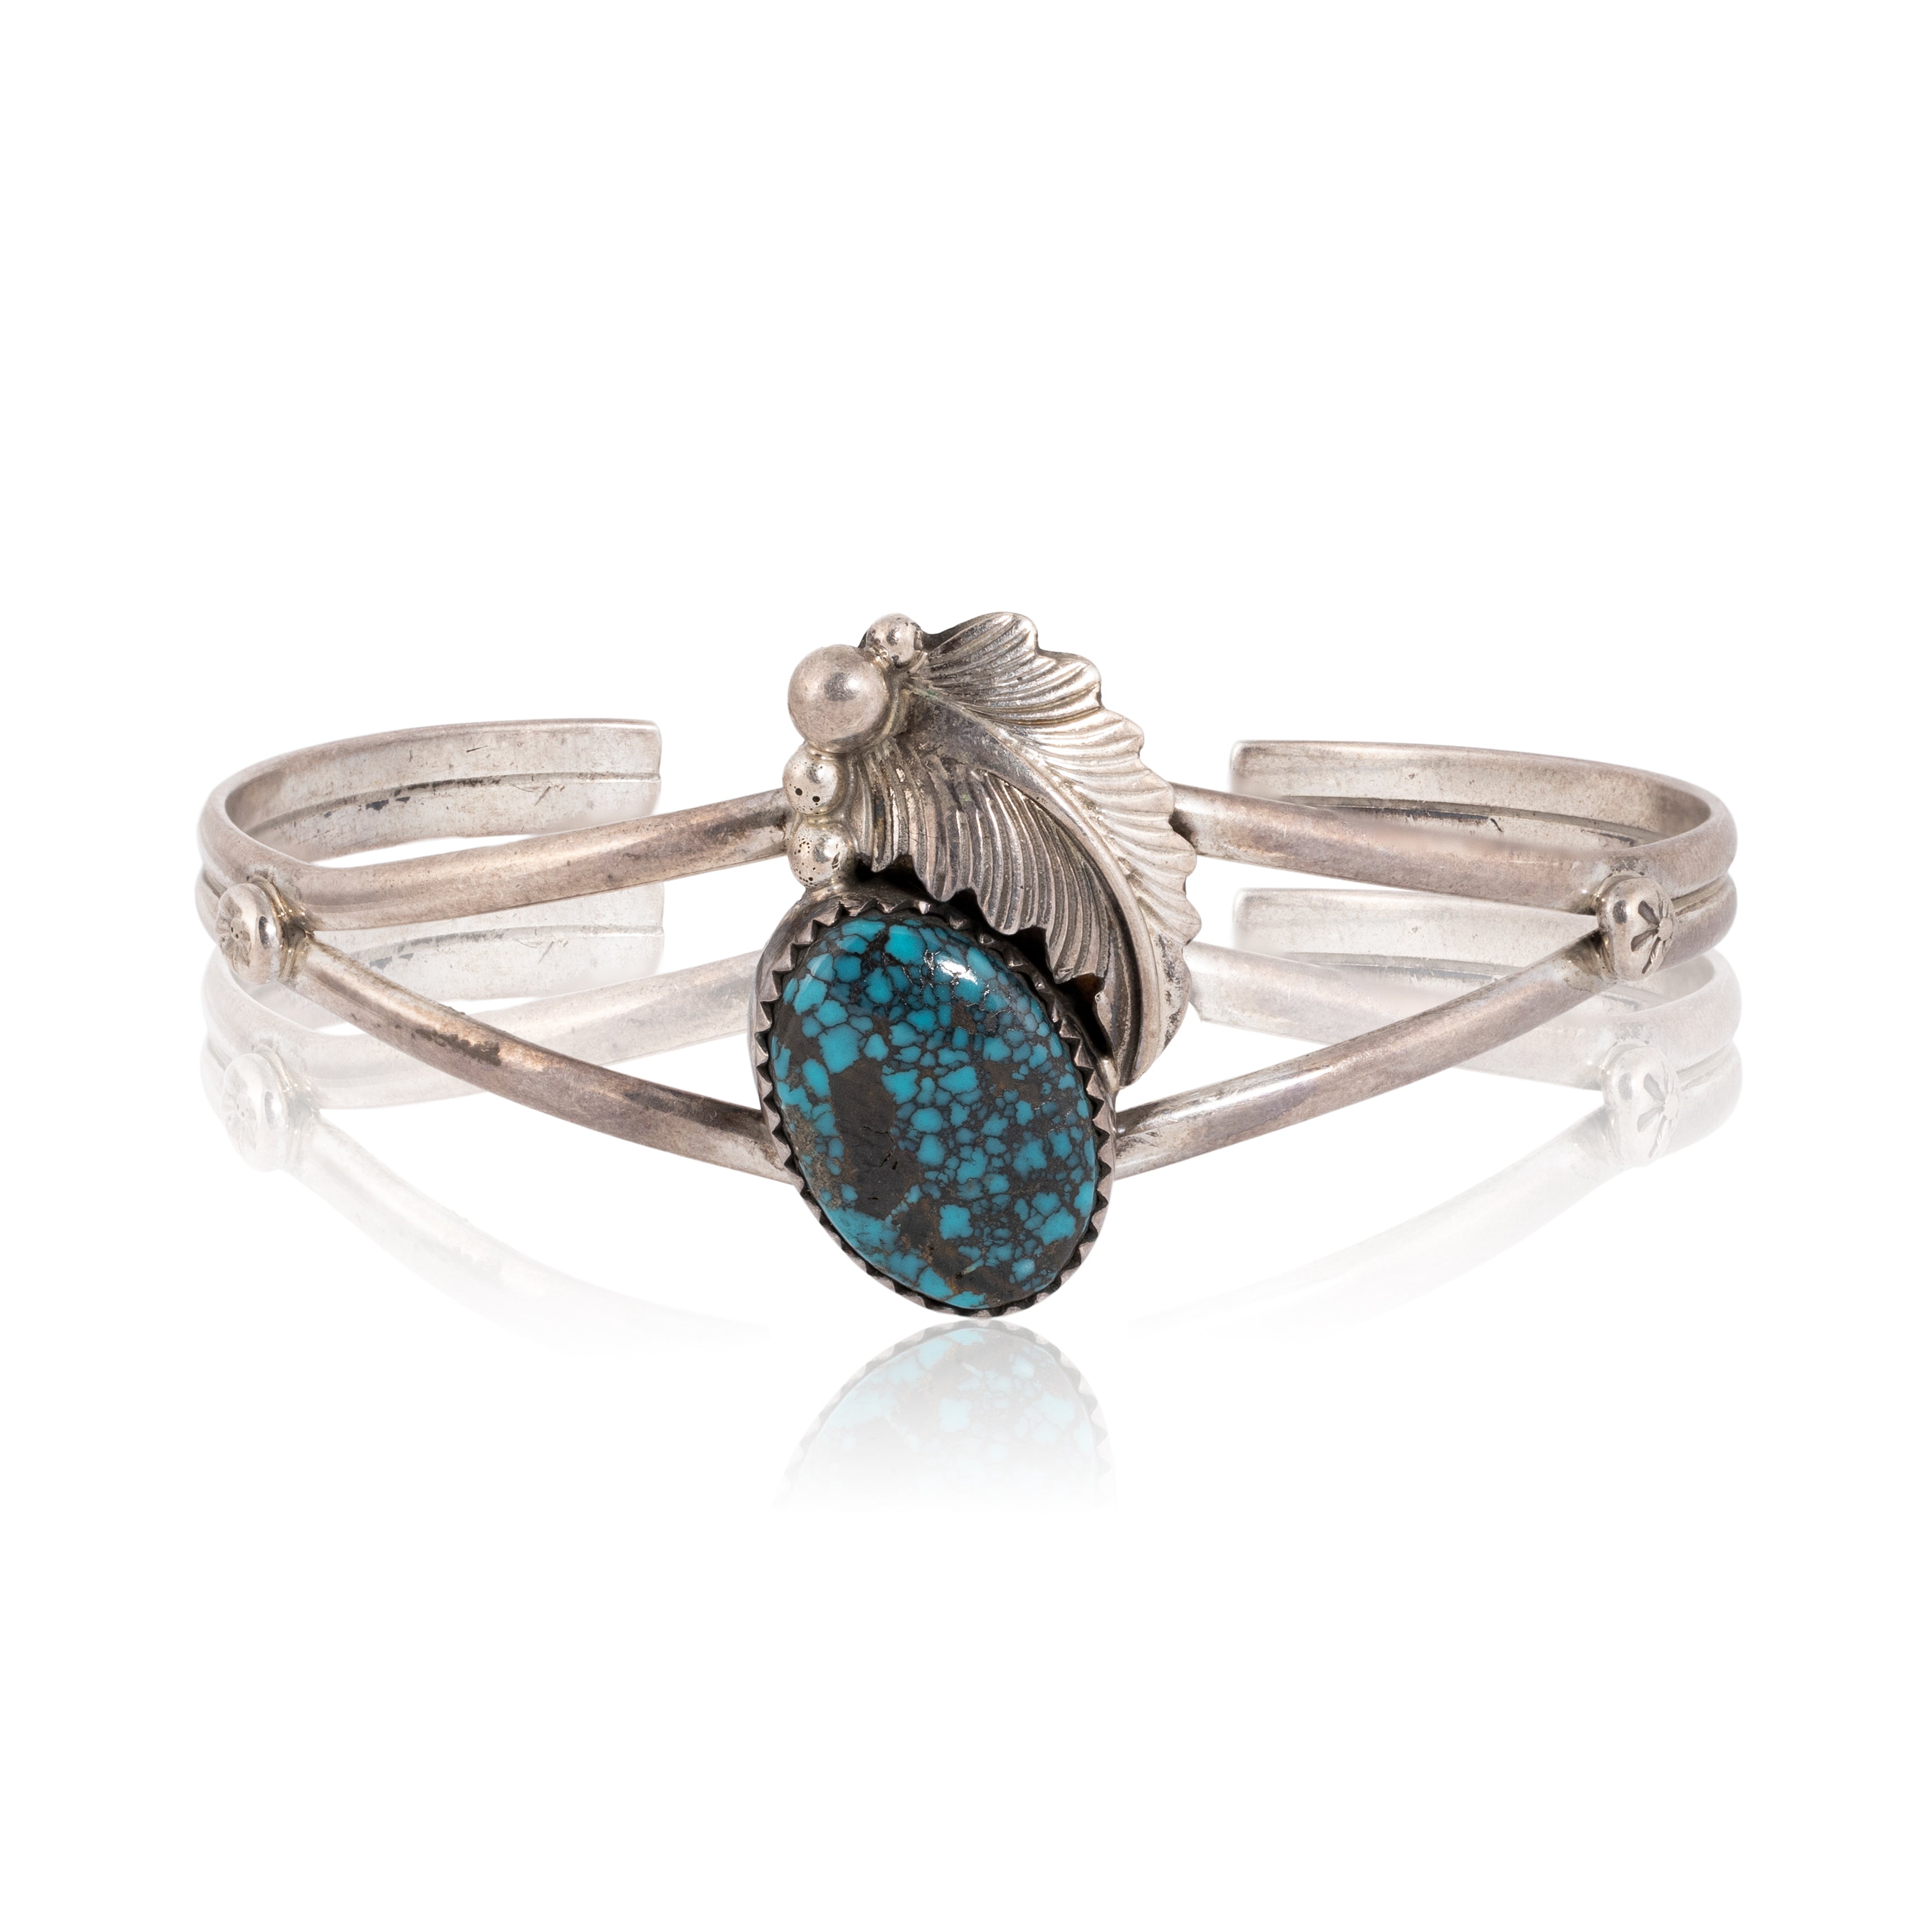 Spider Web Turquoise Bracelet, Jewelry, Bracelet, Native